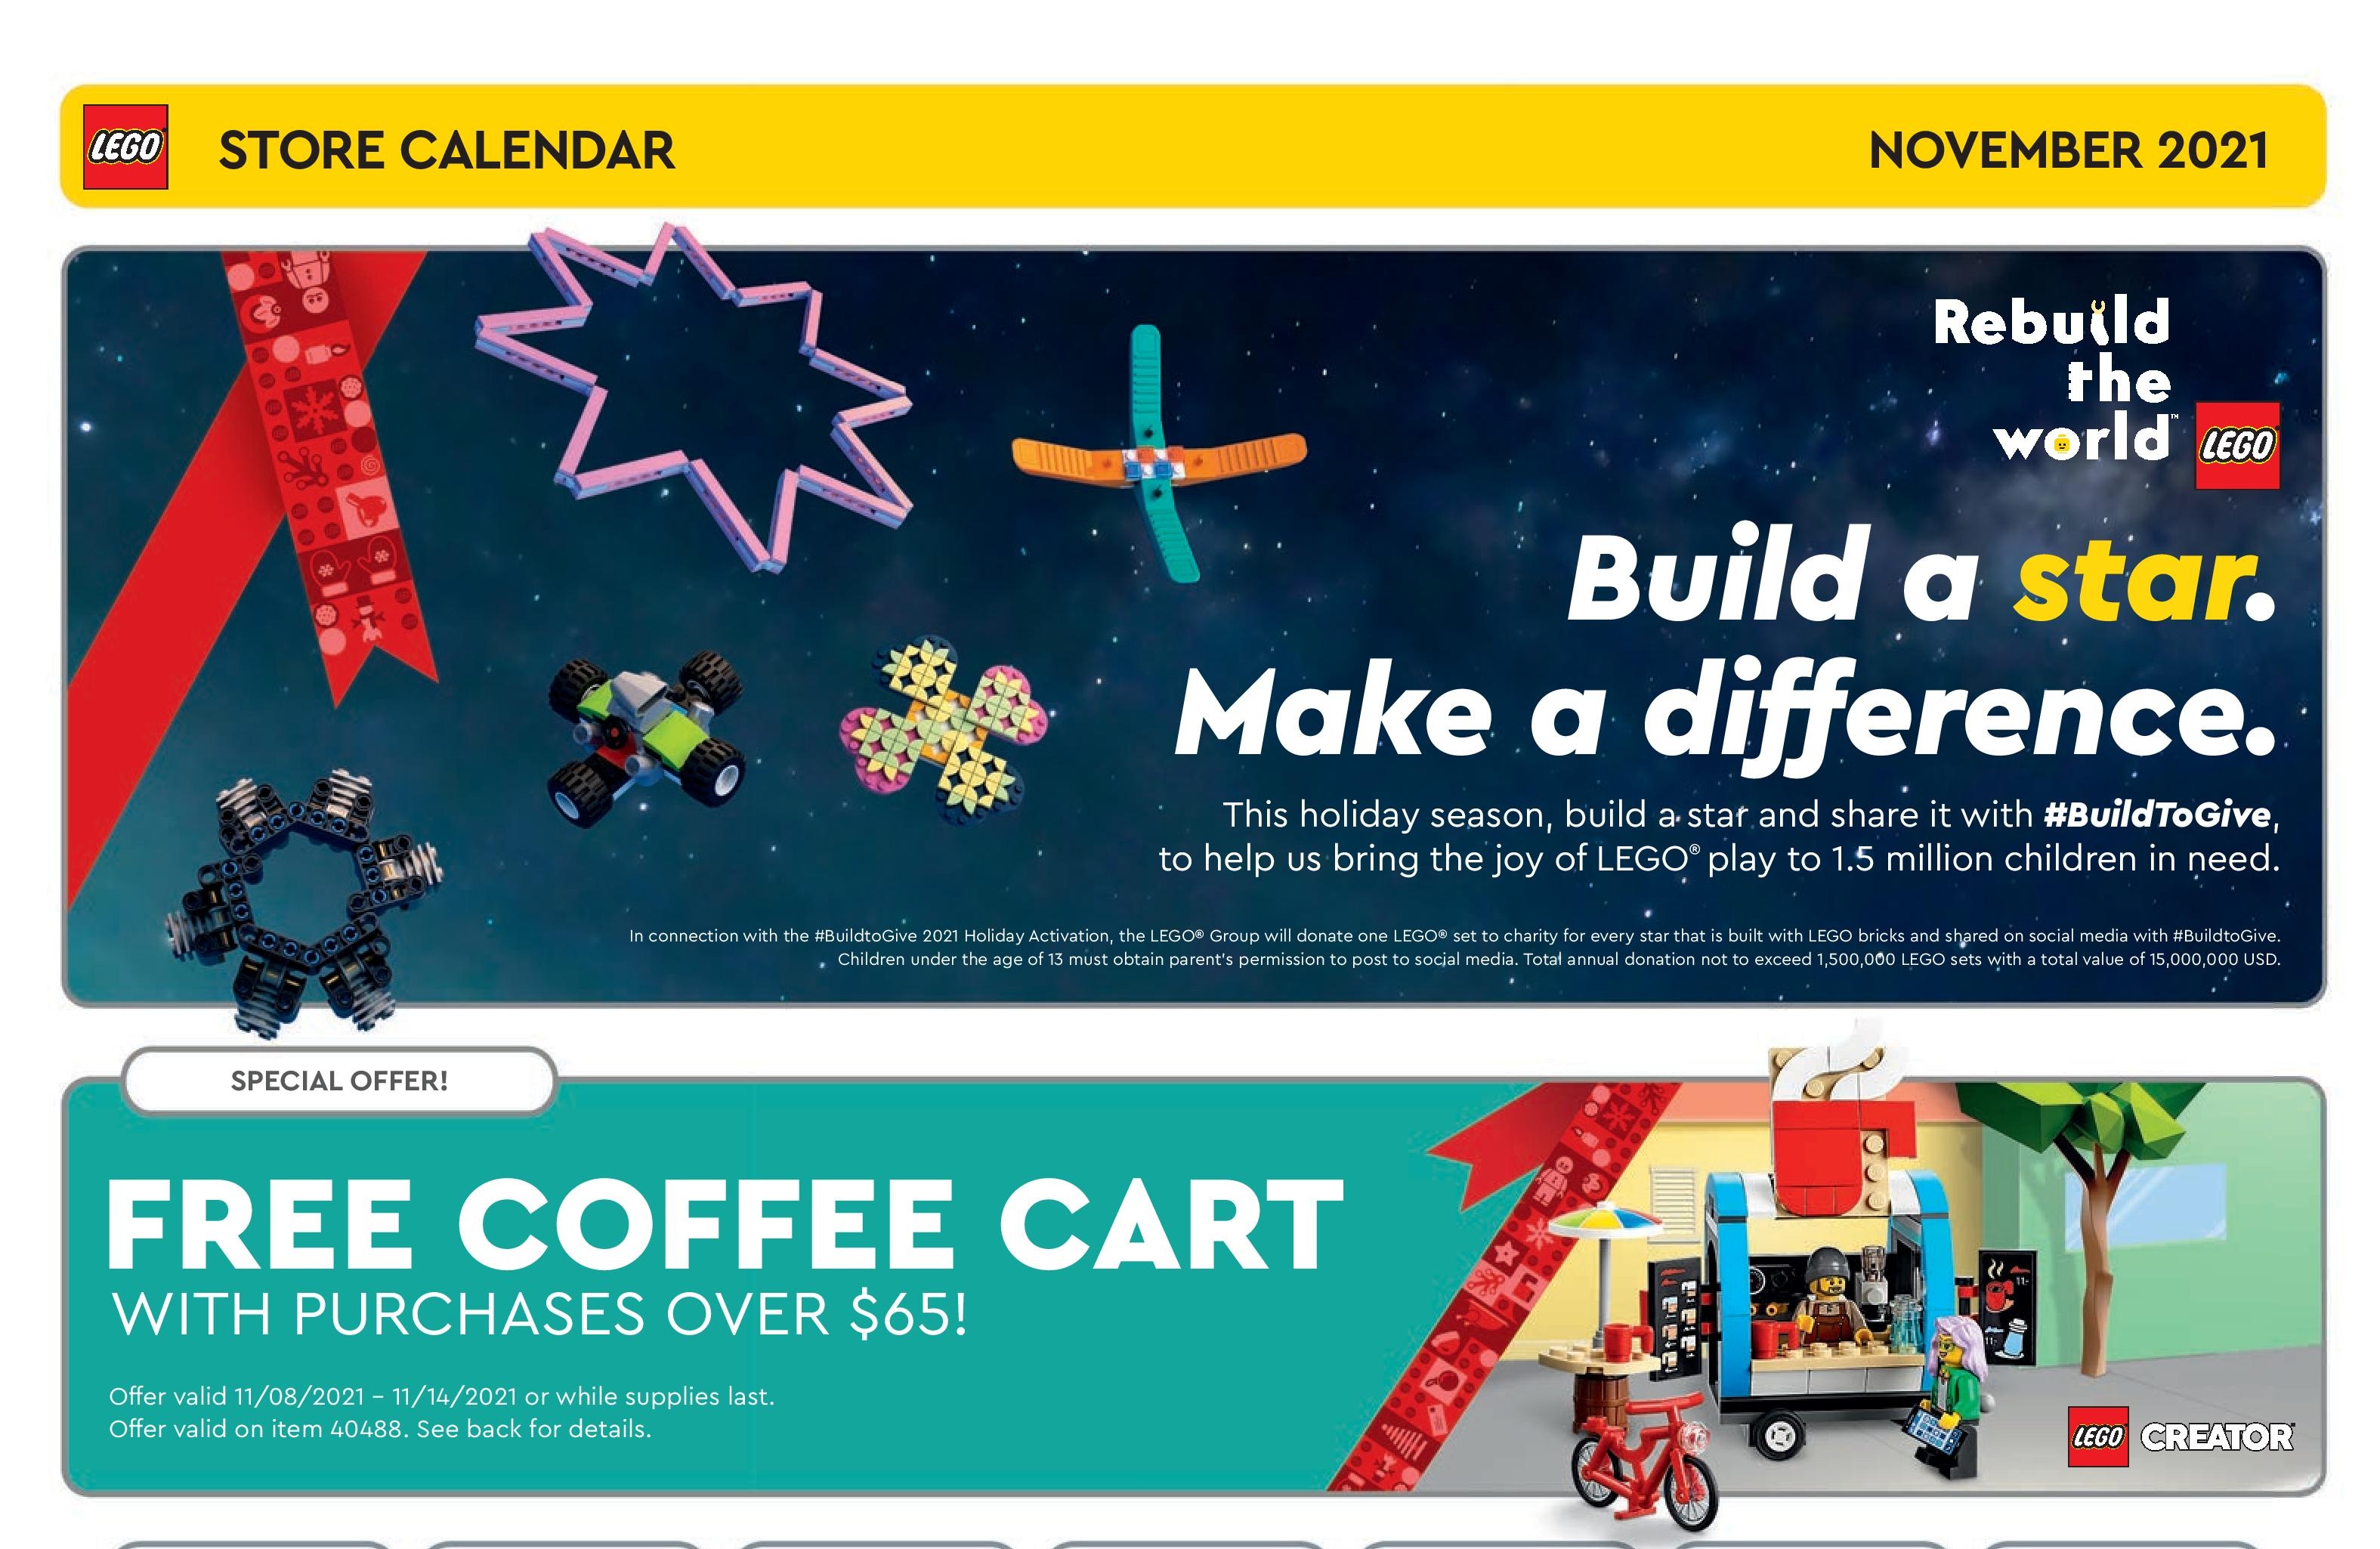 Lego November 2021 Store Calendar Promotions & Events - The Brick Fan